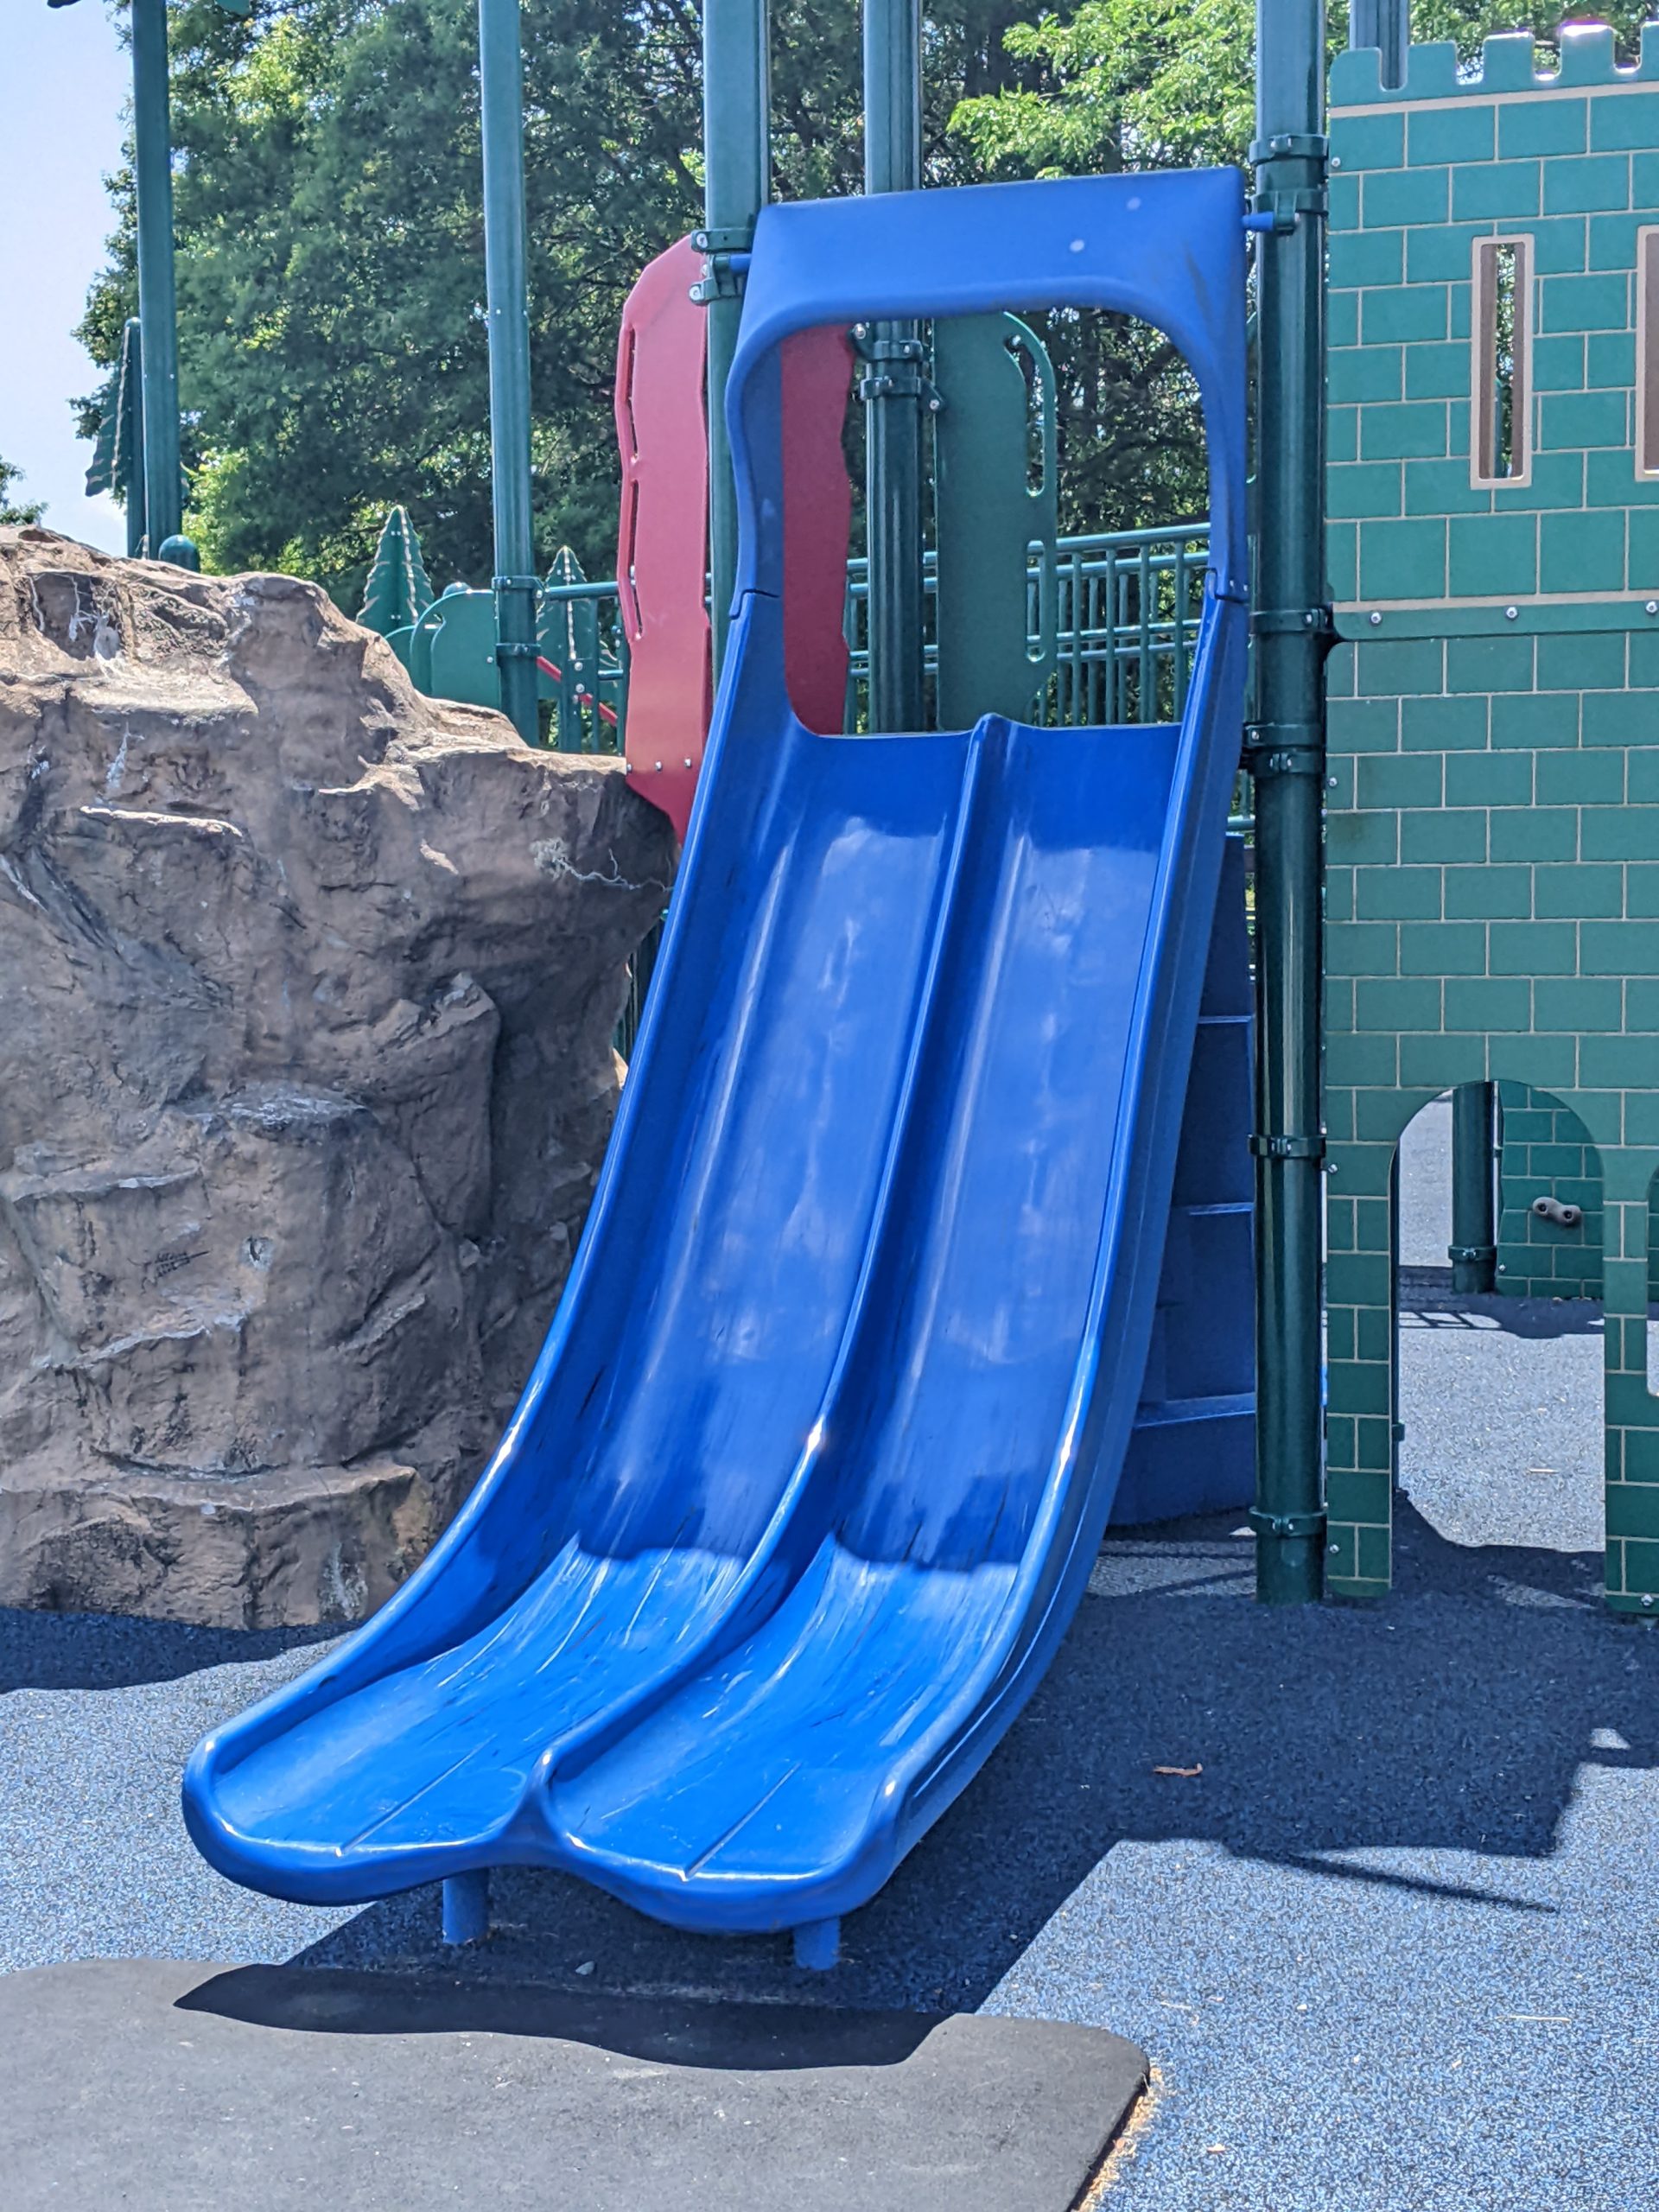 Slide - tall side by side at Imagination Kingdom in Pemberton Township NJ